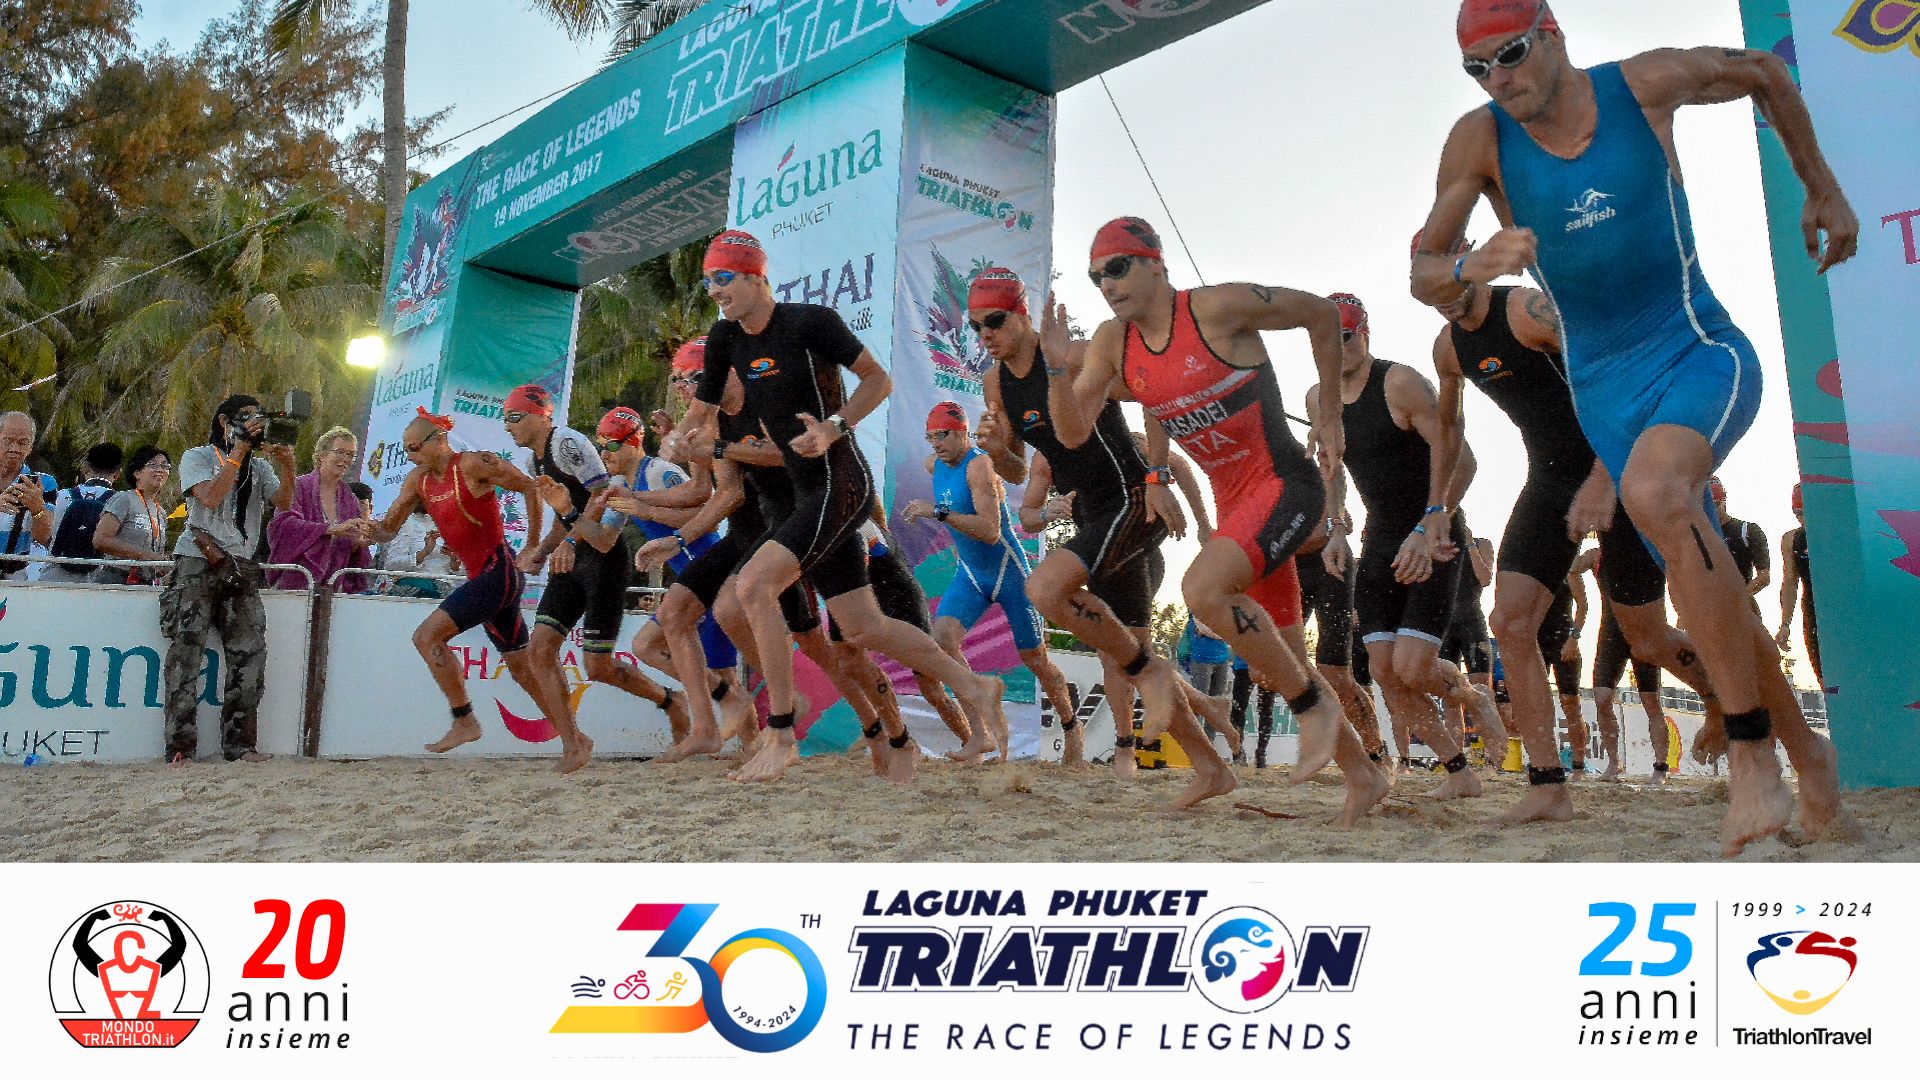 Laguna Phuket Triathlon 2024 anniversari